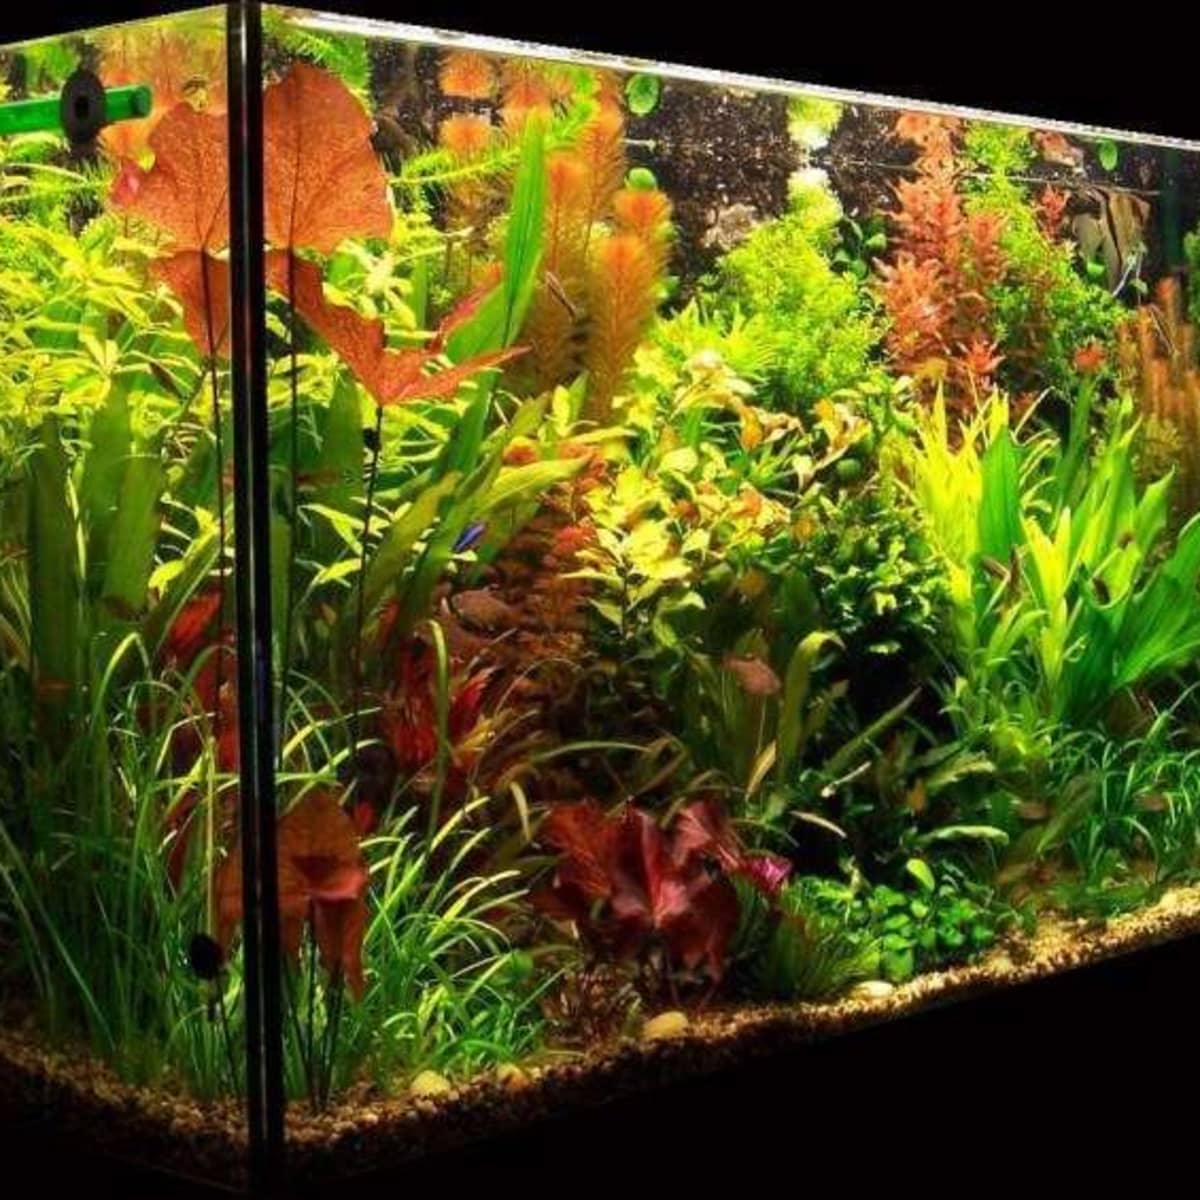 Lighting For A Planted Aquarium - Pethelpful